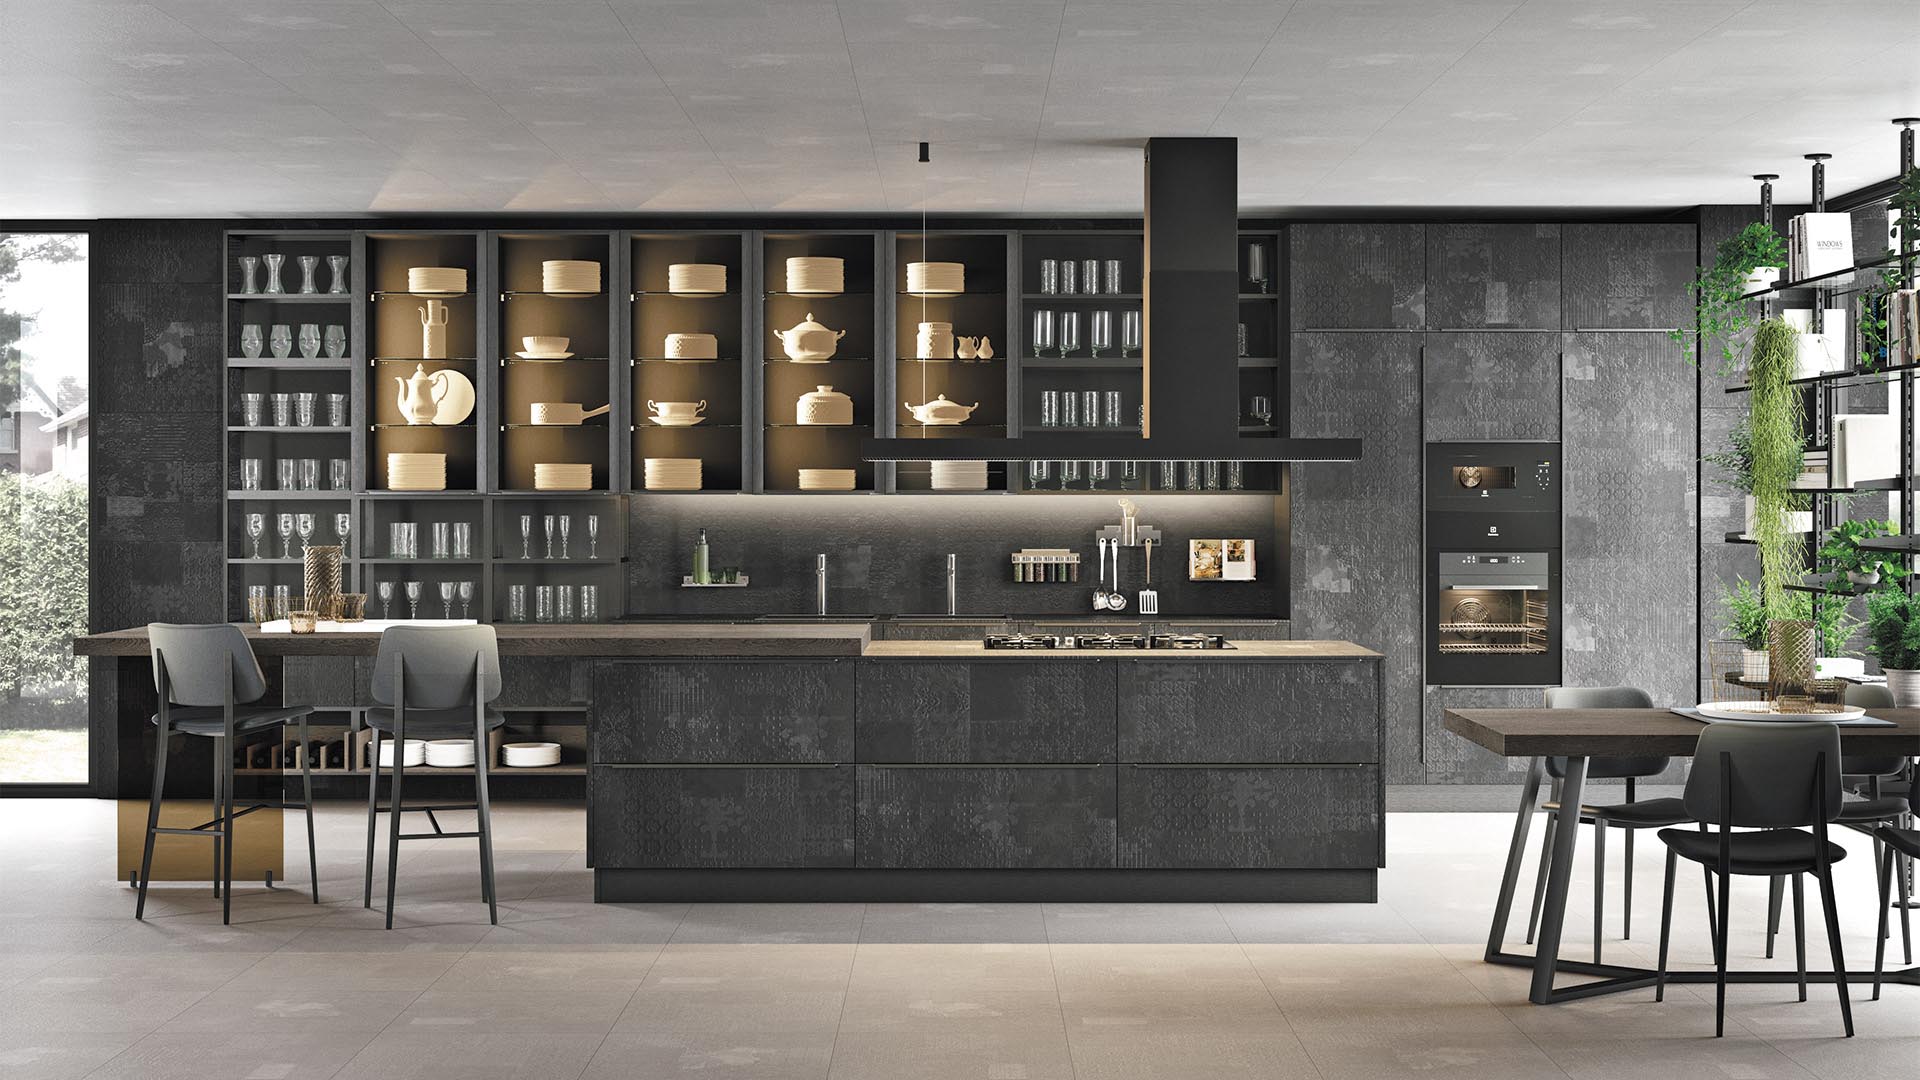 26+ Kitchen furniture nicosia ideas in 2022 